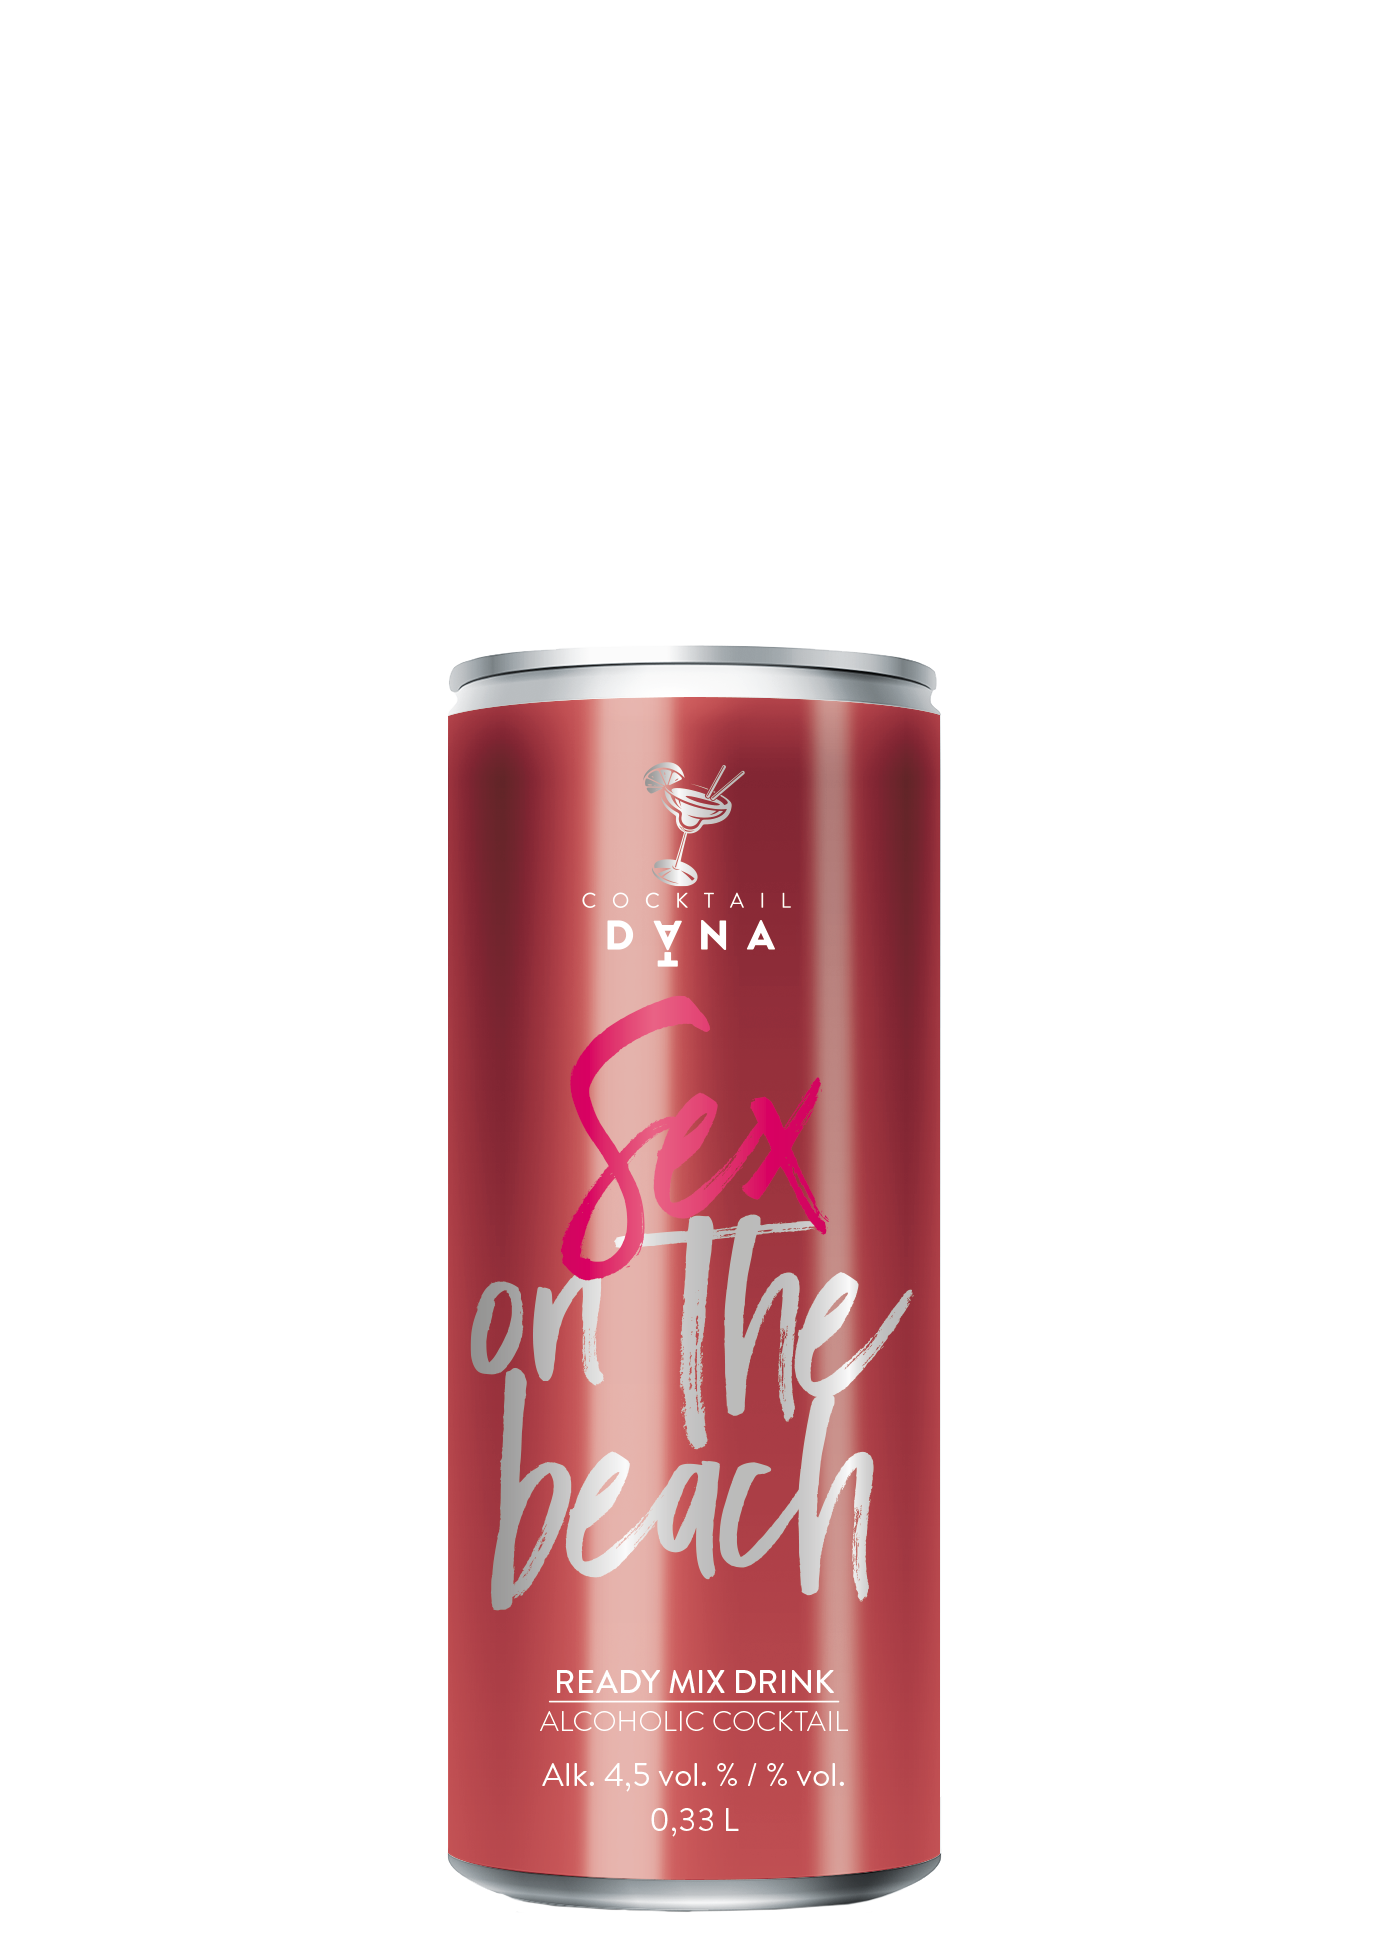 Dana Cocktail Sex on the beach, alk.: 4,5 % vol.